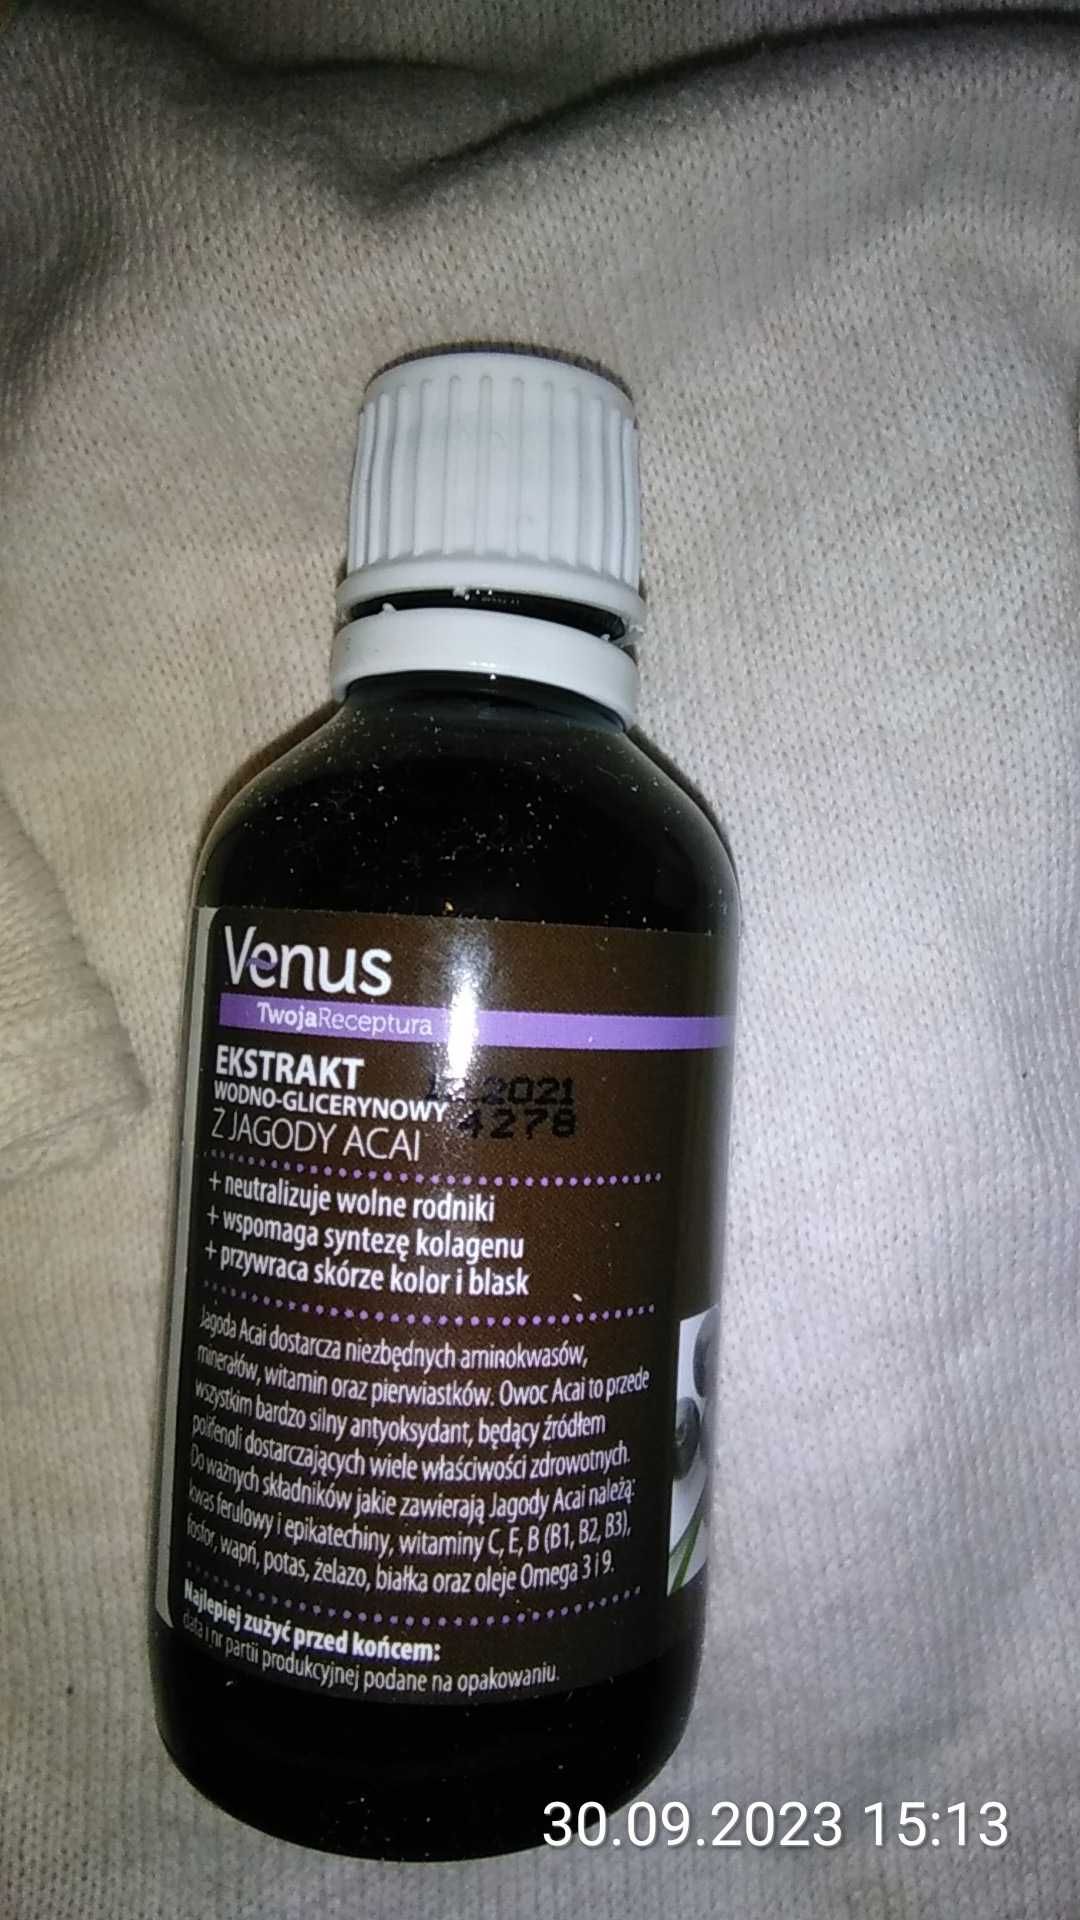 Venus ekstrakt wodno-glicerynowy jagody acai